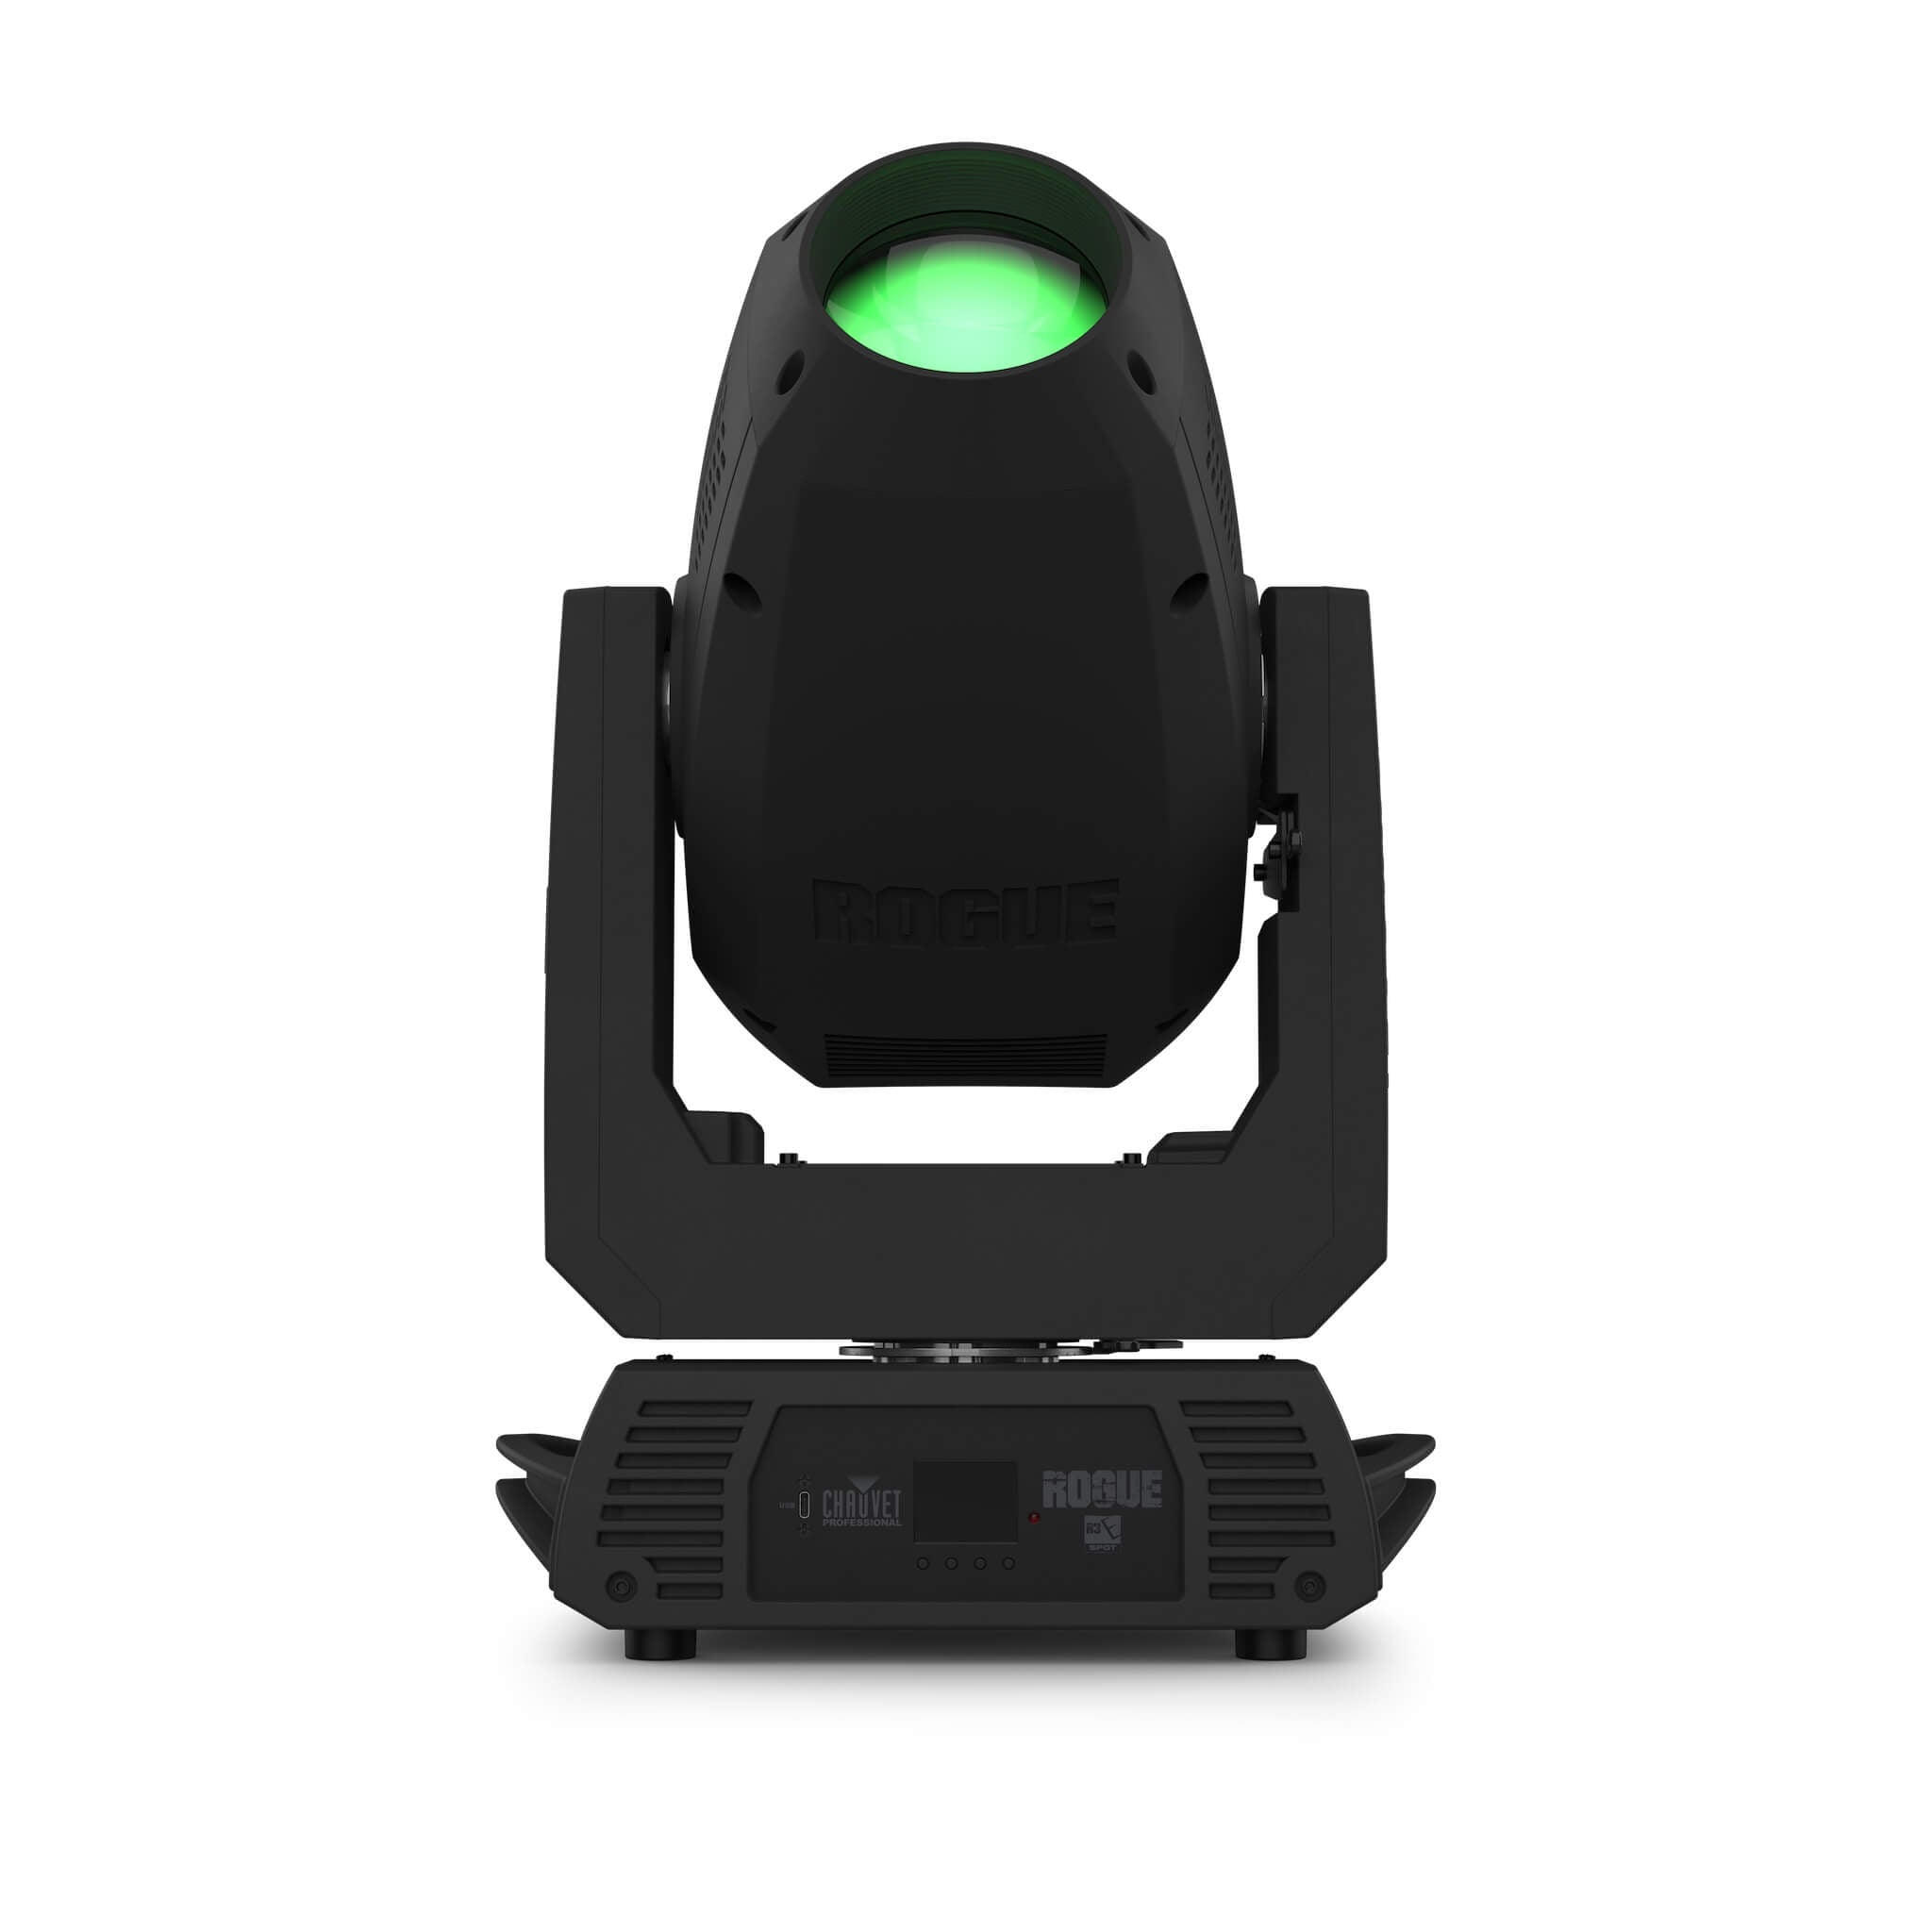 Chauvet Professional Rogue R3E Spot - 350W LED Moving Head Fixture, front